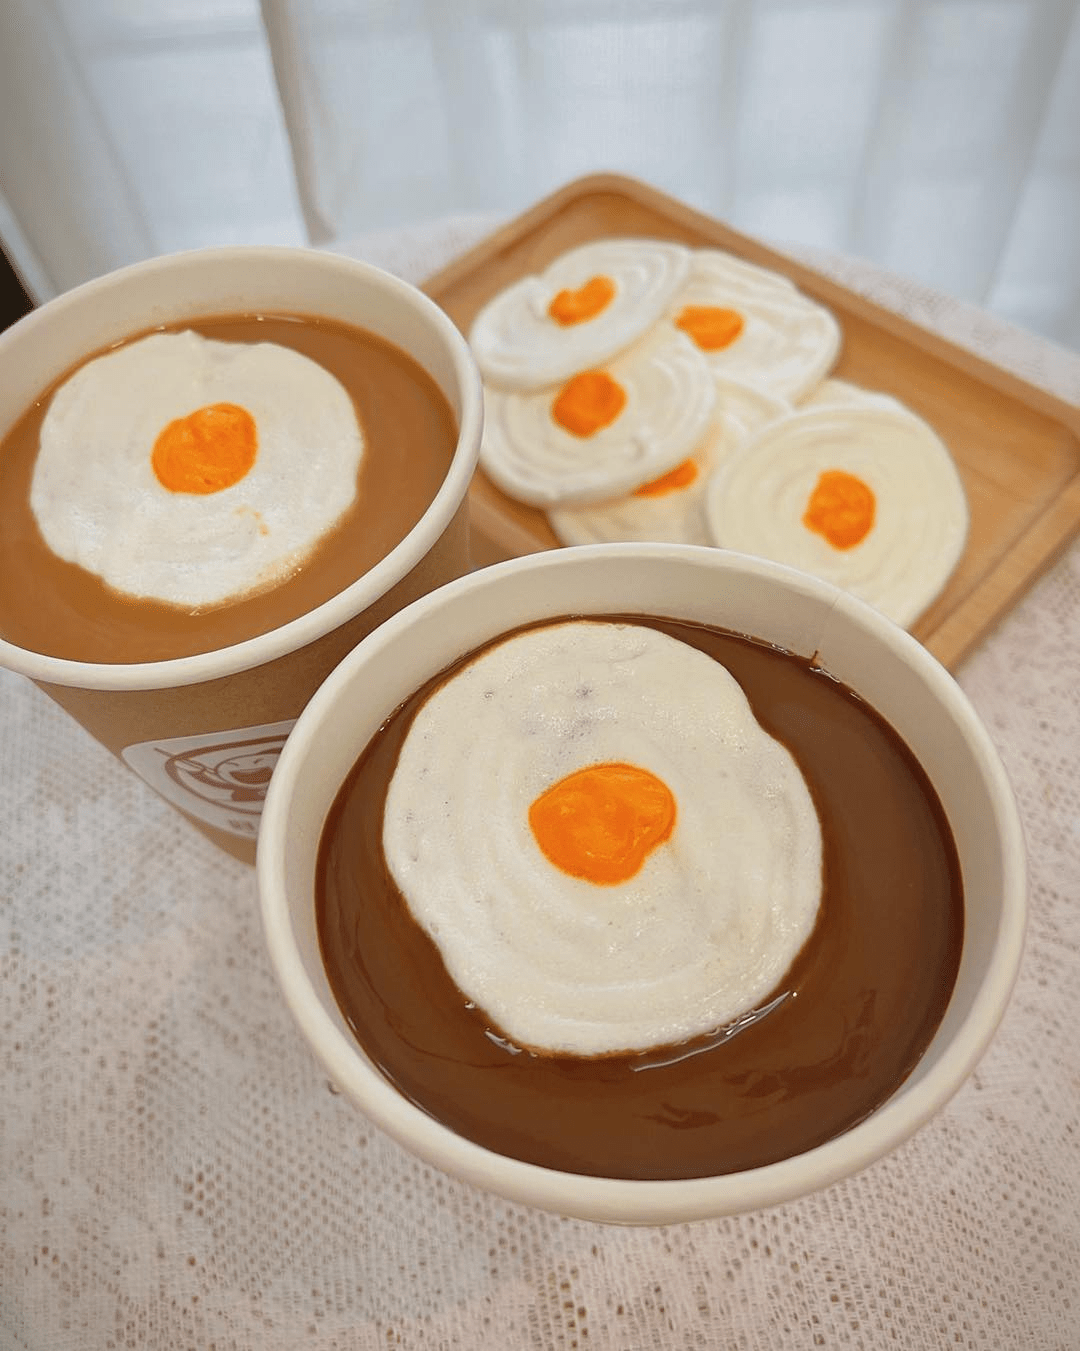 Egg coffee from Subang noodle house - Sunshine Egg